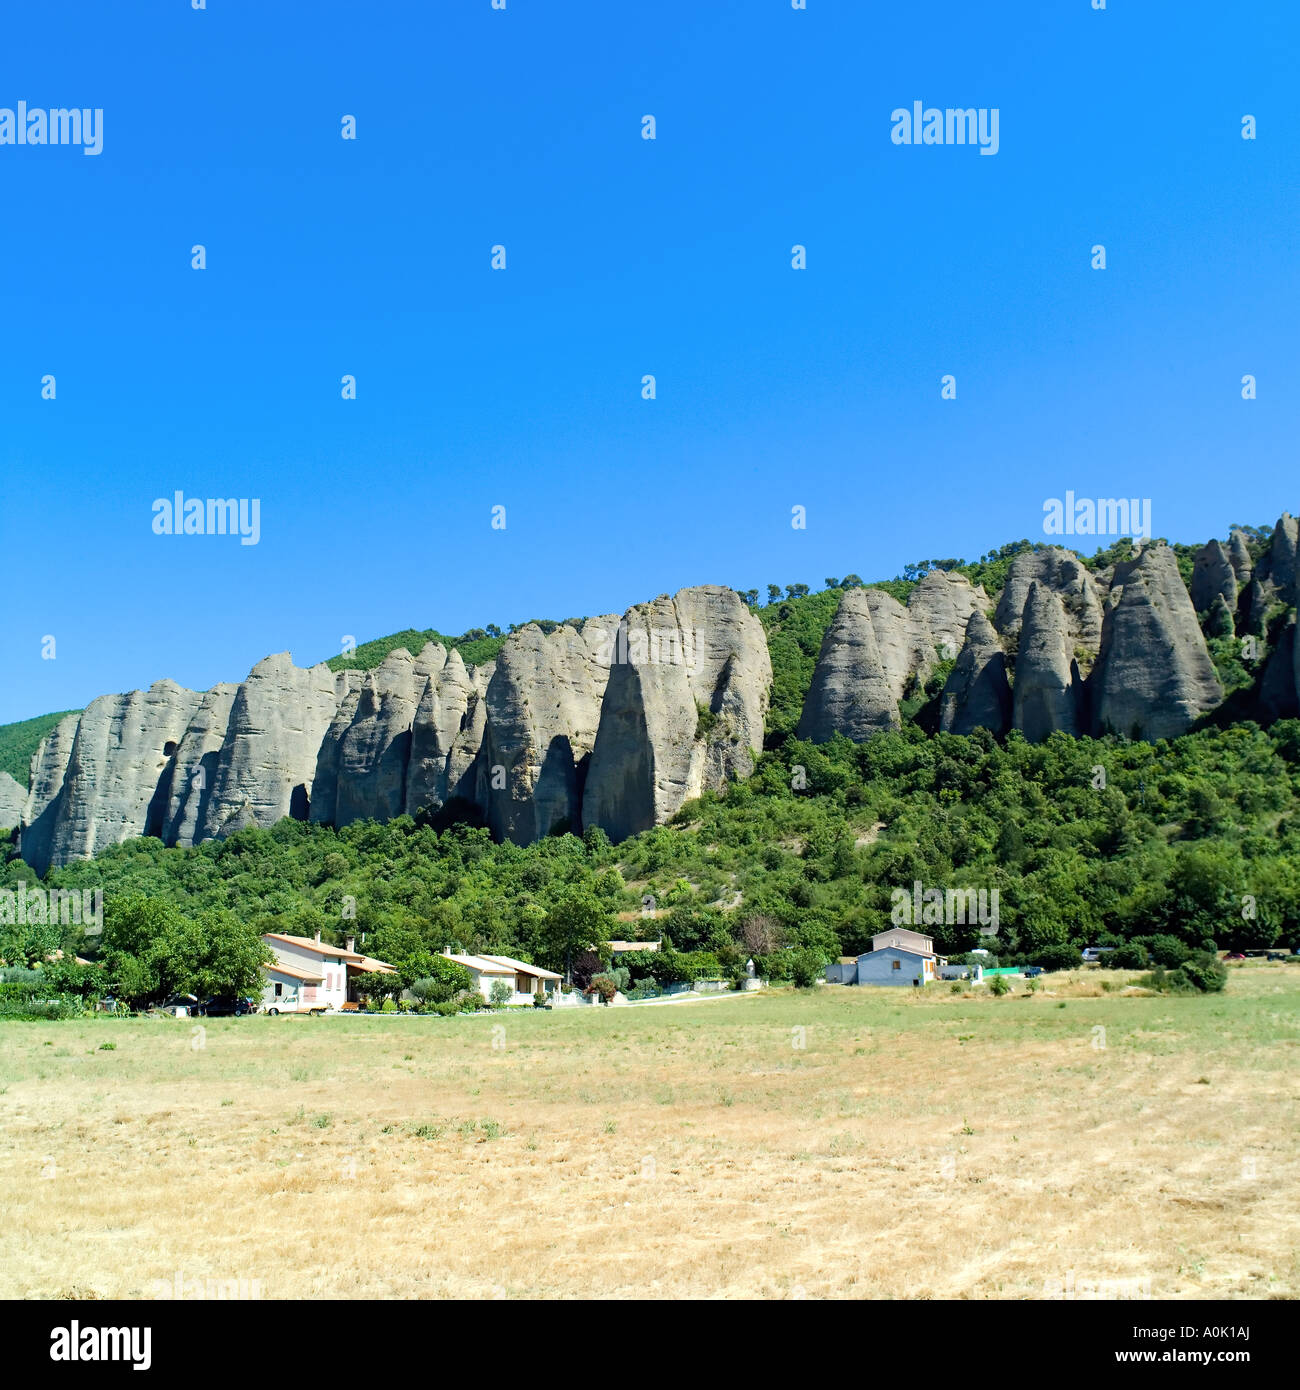 Les Pénitents des Mées formazione di roccia, scogliere, case, Les Mées, valle della Durance, Alpes-de-Haute-Provence, Francia Foto Stock